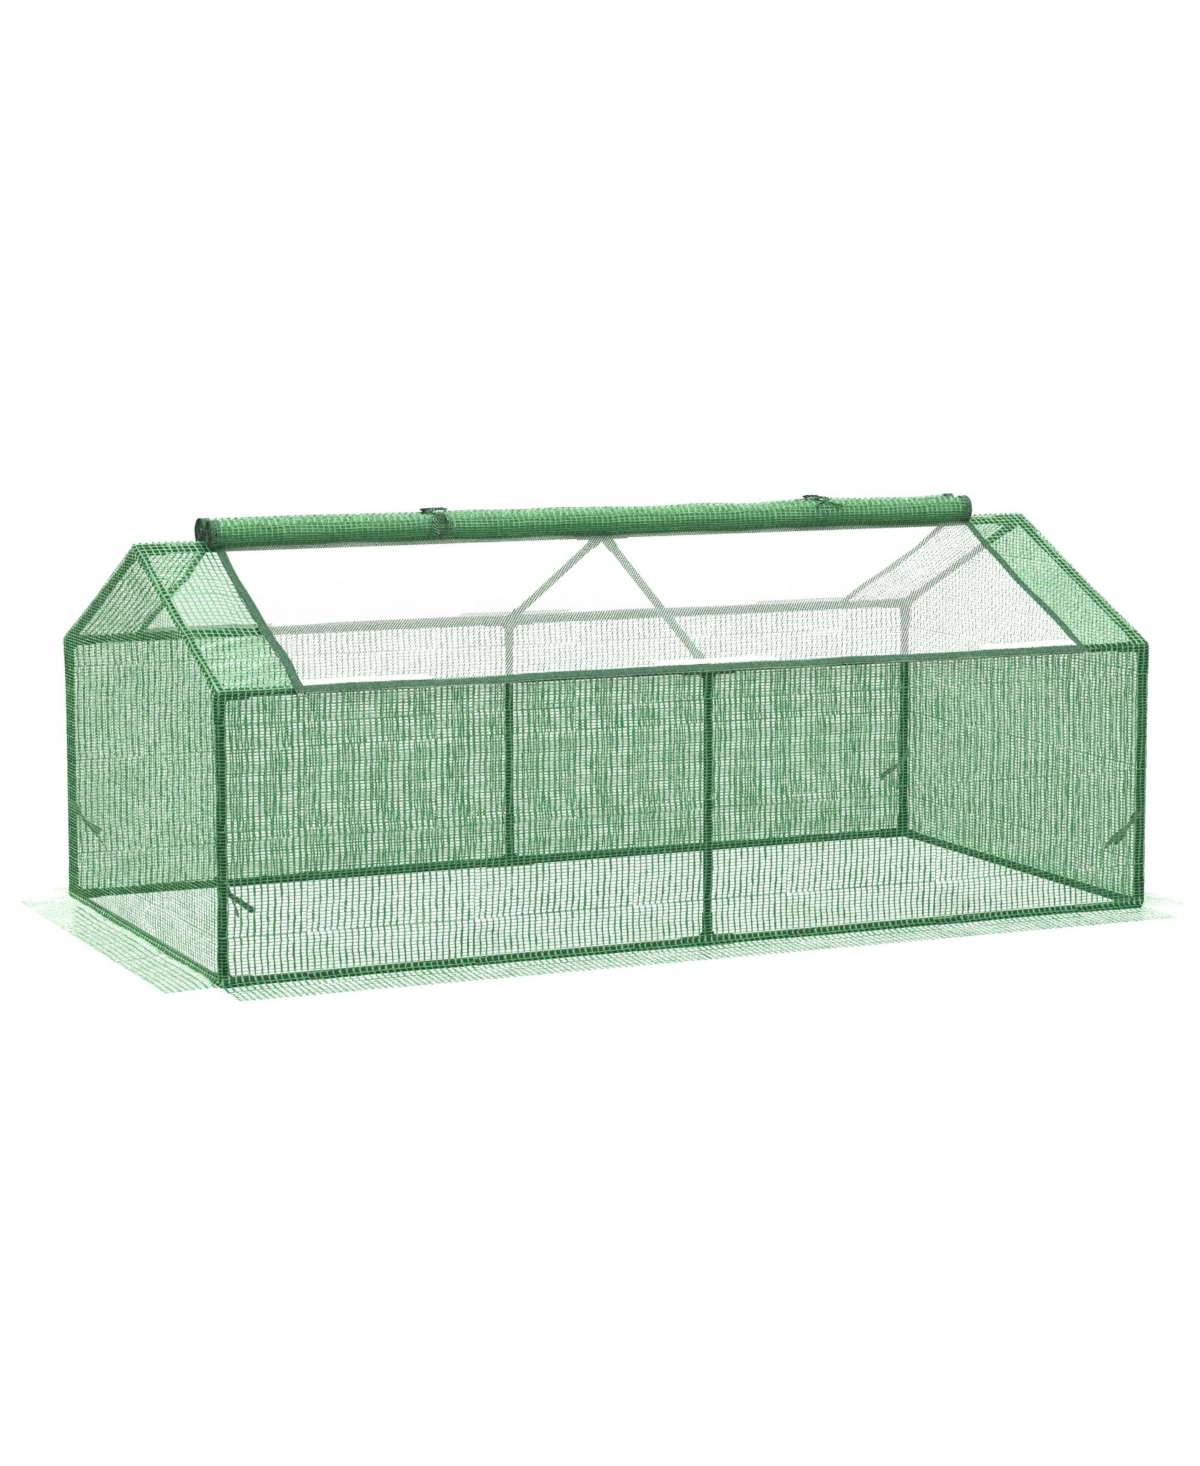 Mini Greenhouse Portable Hot House w/ Windows, 71"x36"x28" Green - Green